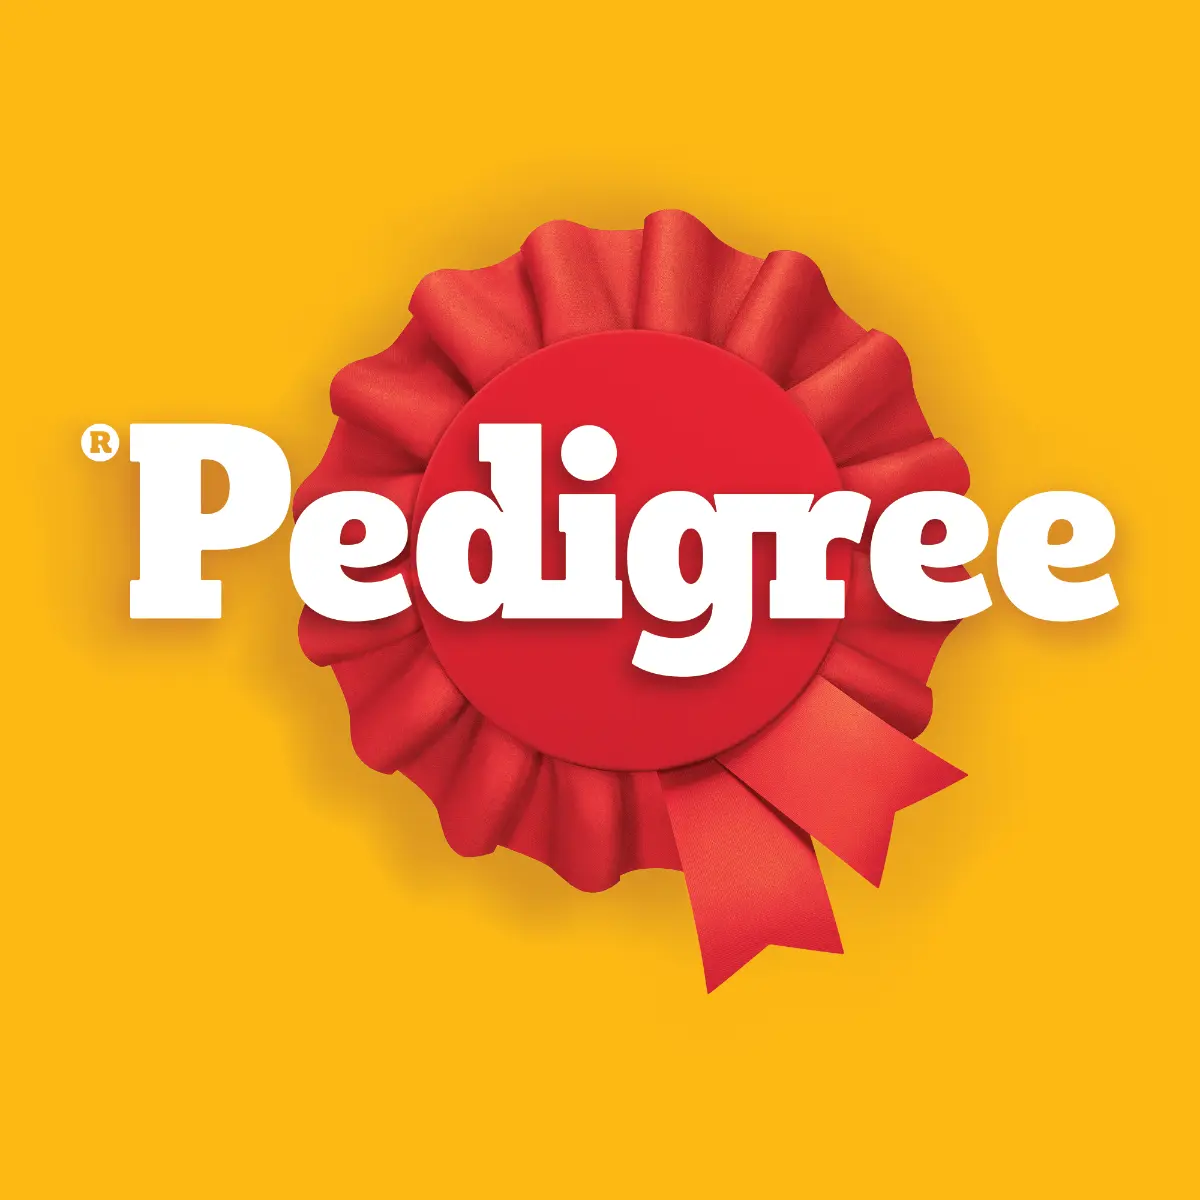 Recompense Pedigree Tasty Bites pentru caini adulti, cu pui 130 g